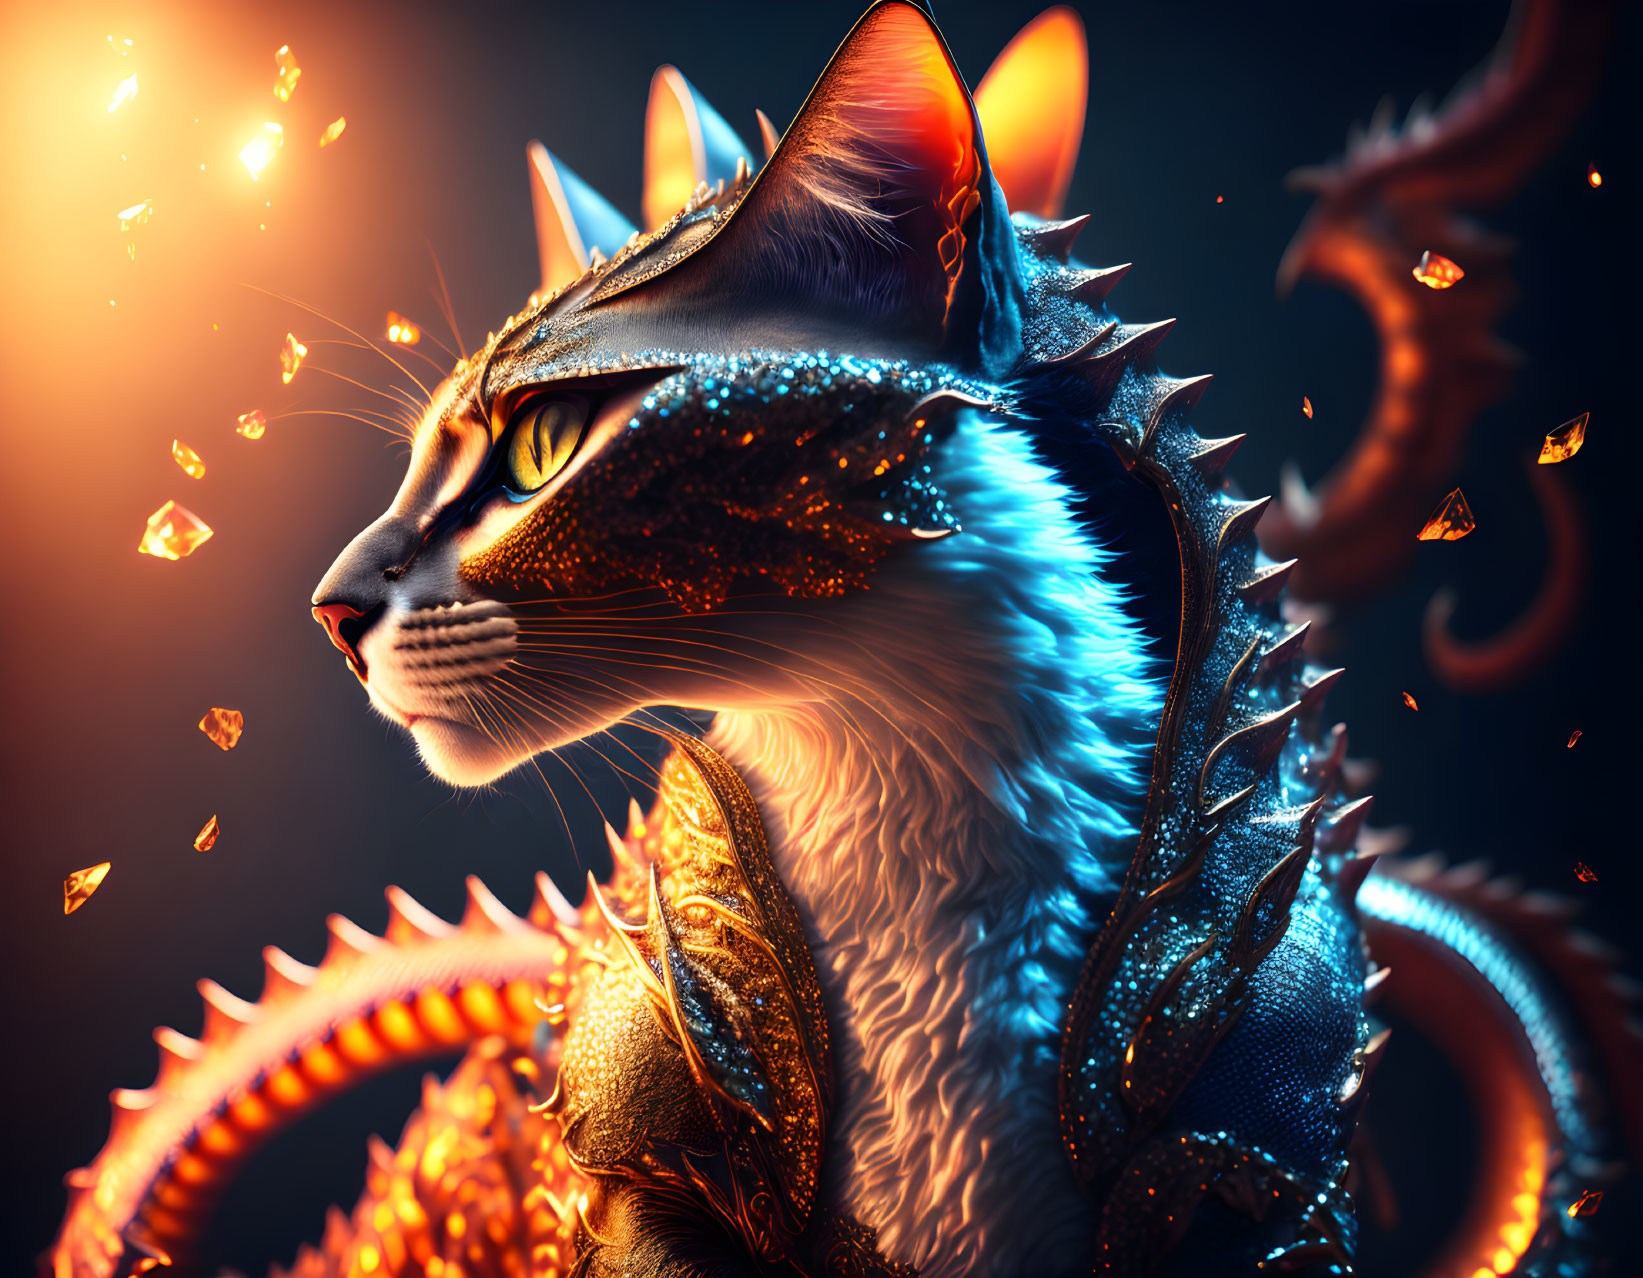 Majestic feline creature in golden armor with glowing eyes